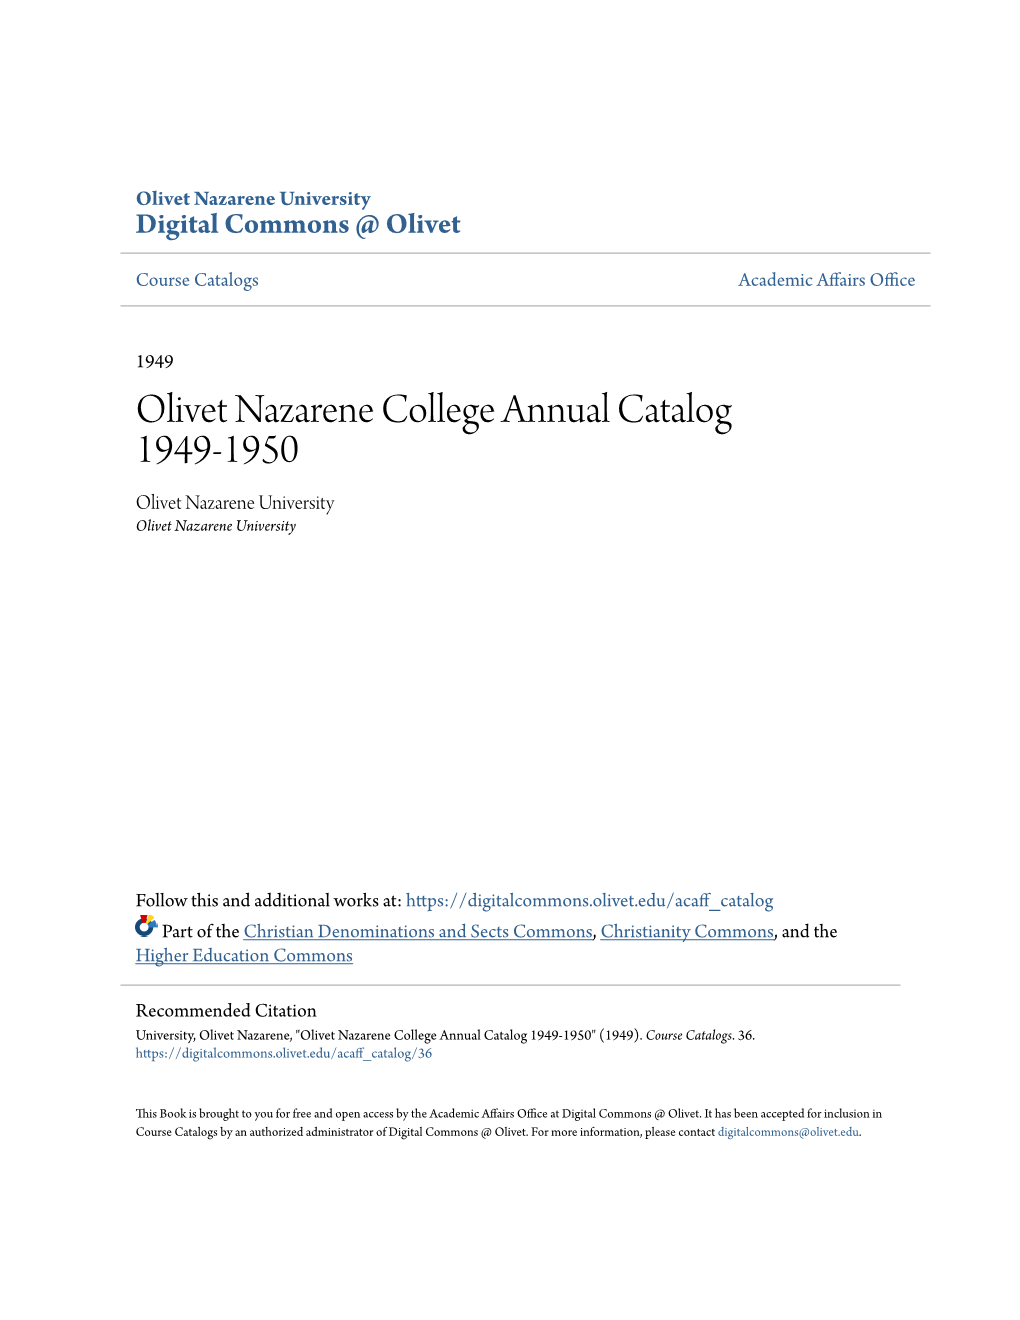 Olivet Nazarene College Annual Catalog 1949-1950 Olivet Nazarene University Olivet Nazarene University